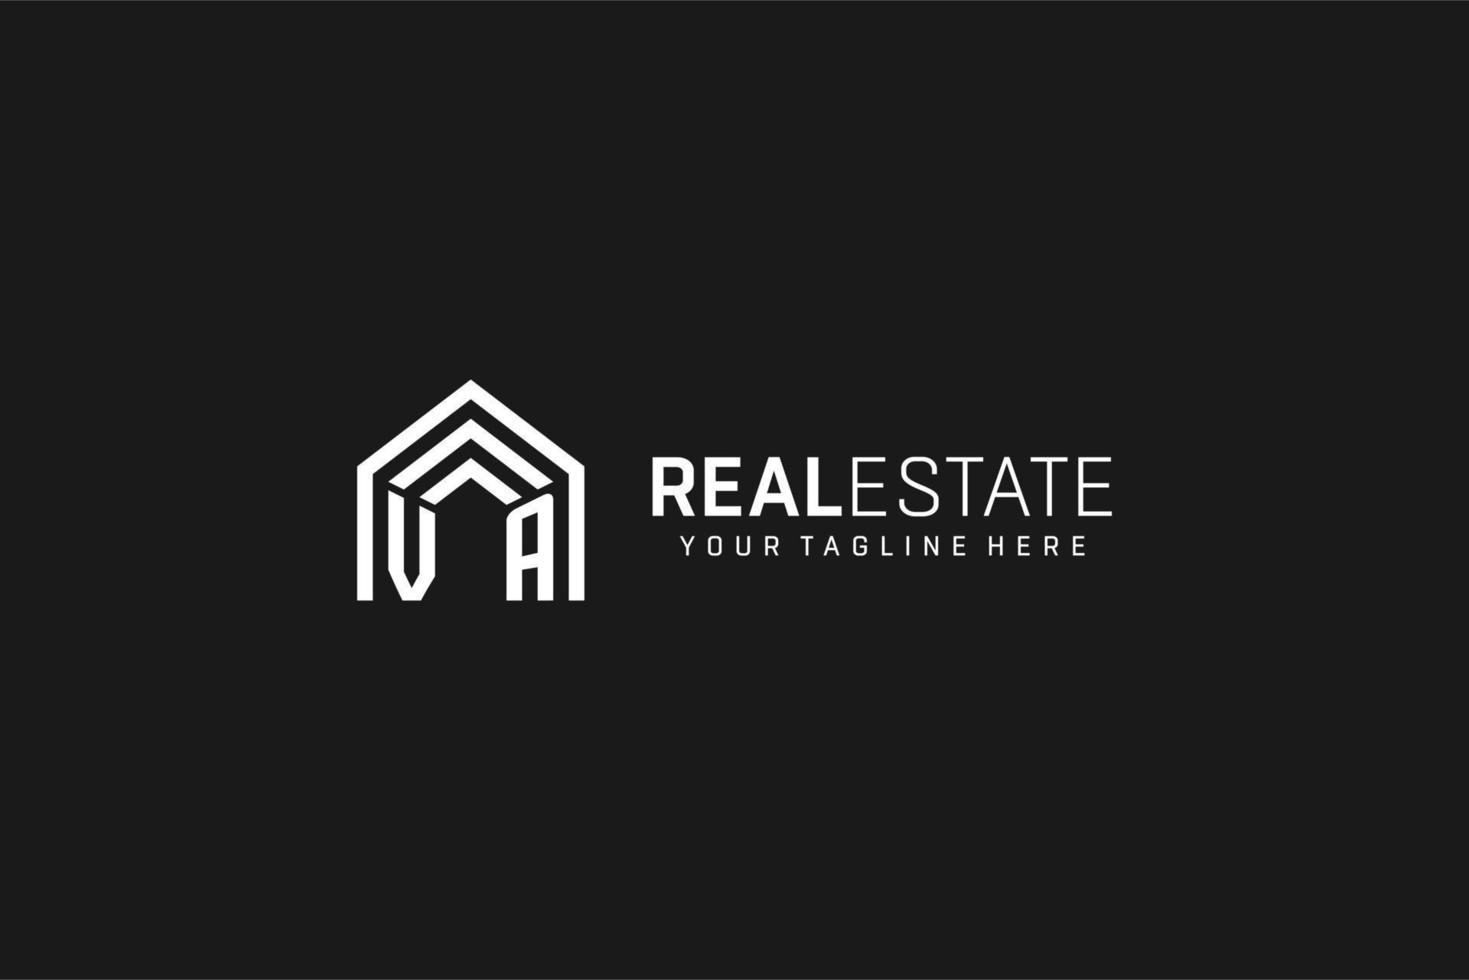 Letter VA house roof shape logo, creative real estate monogram logo style vector